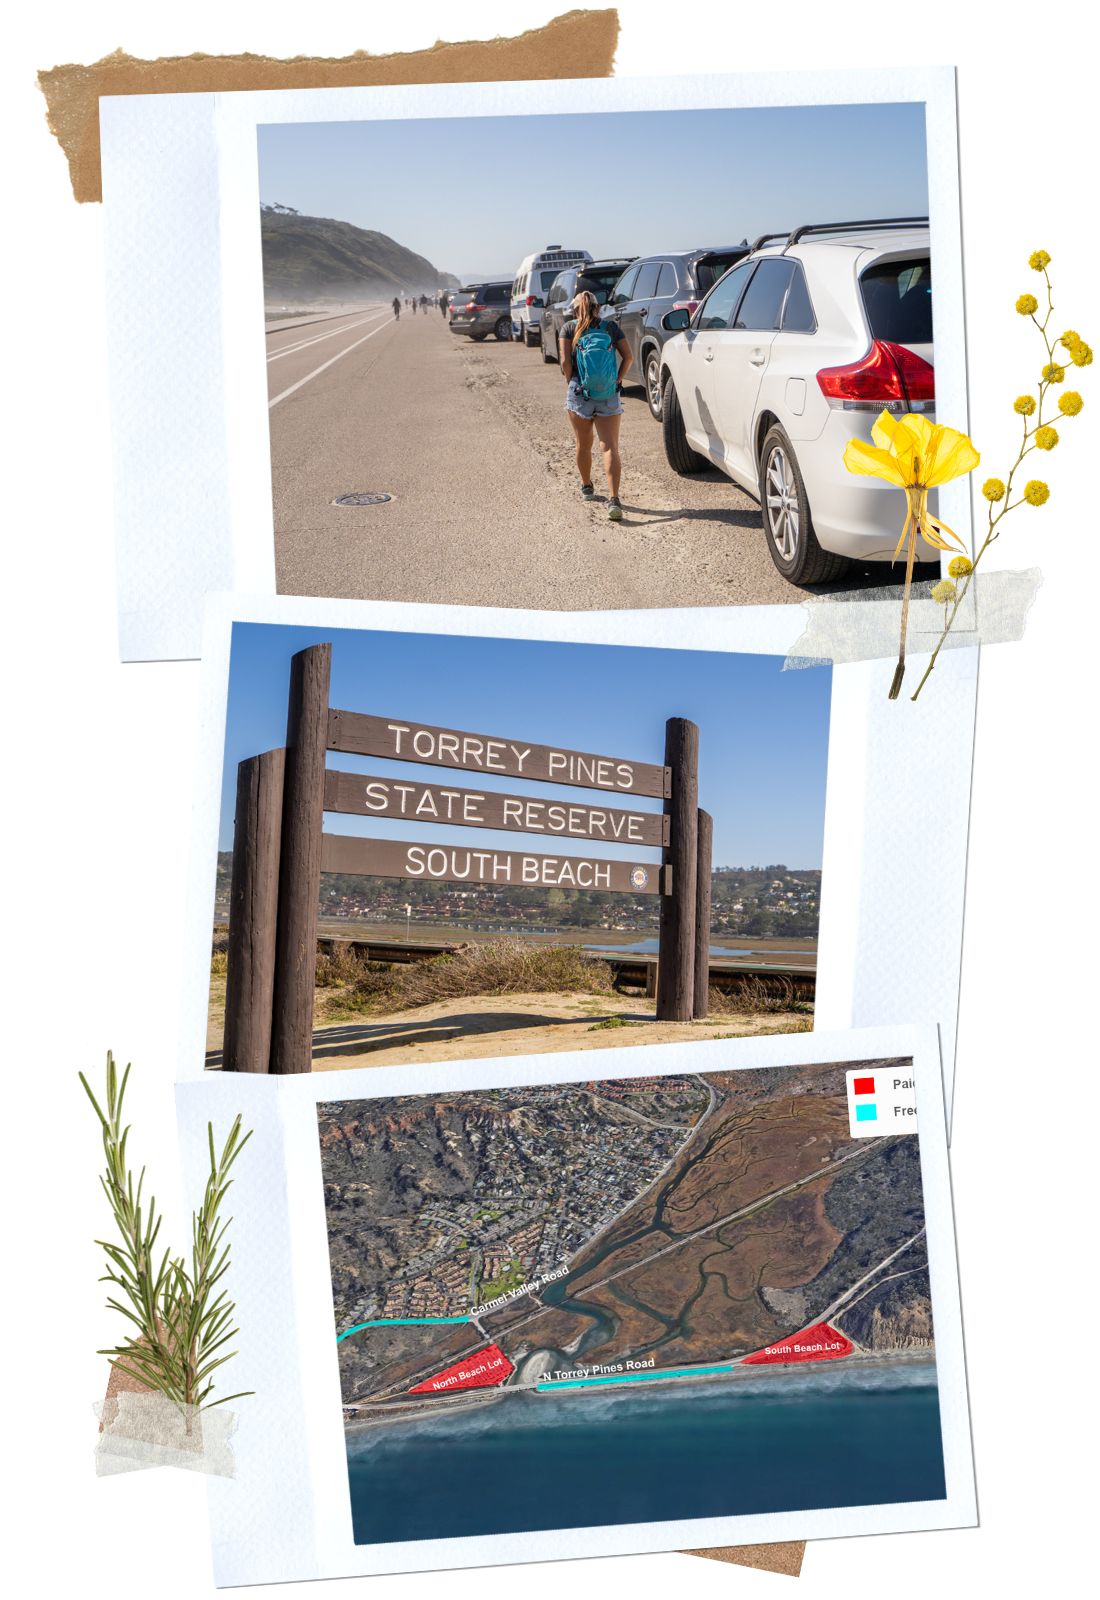 Getting to Torrey Pines State Natural Reserve | La Jolla, CA